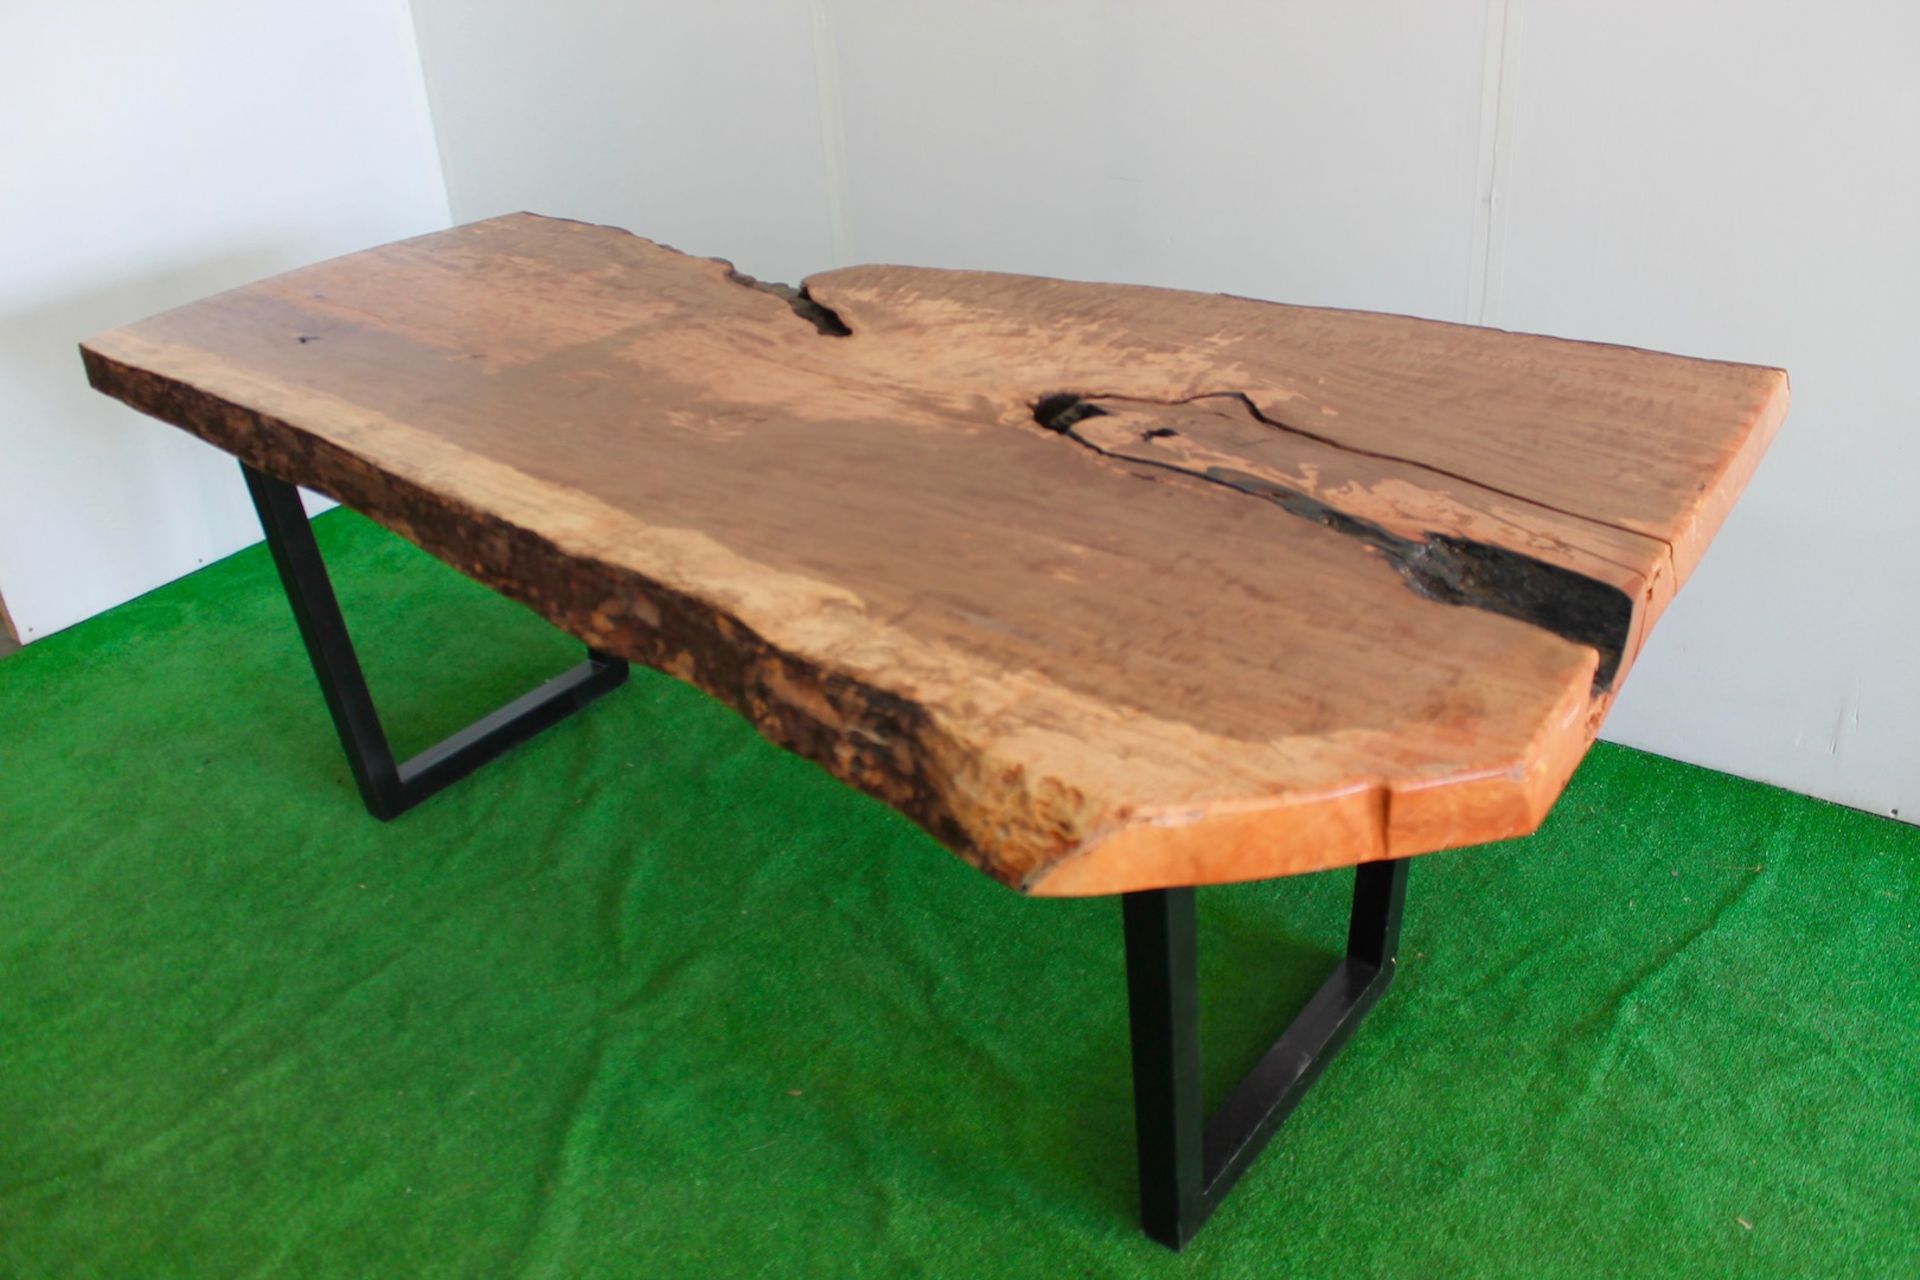 Exquisite Bespoke Waney Edge Table - 212cm in Length - Bild 2 aus 5